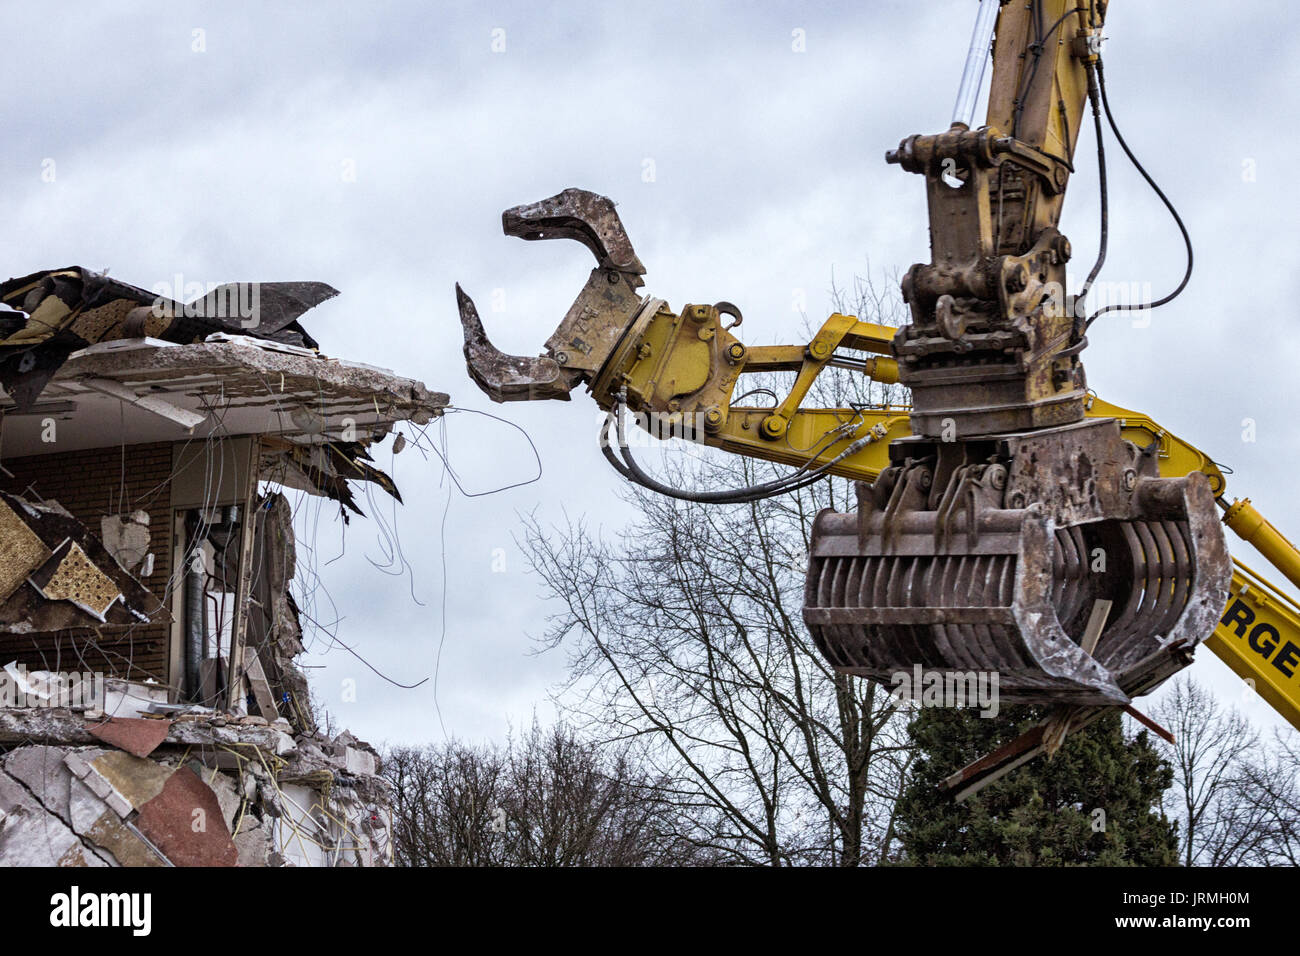 Demolition cranes dismantling a building Stock Photo